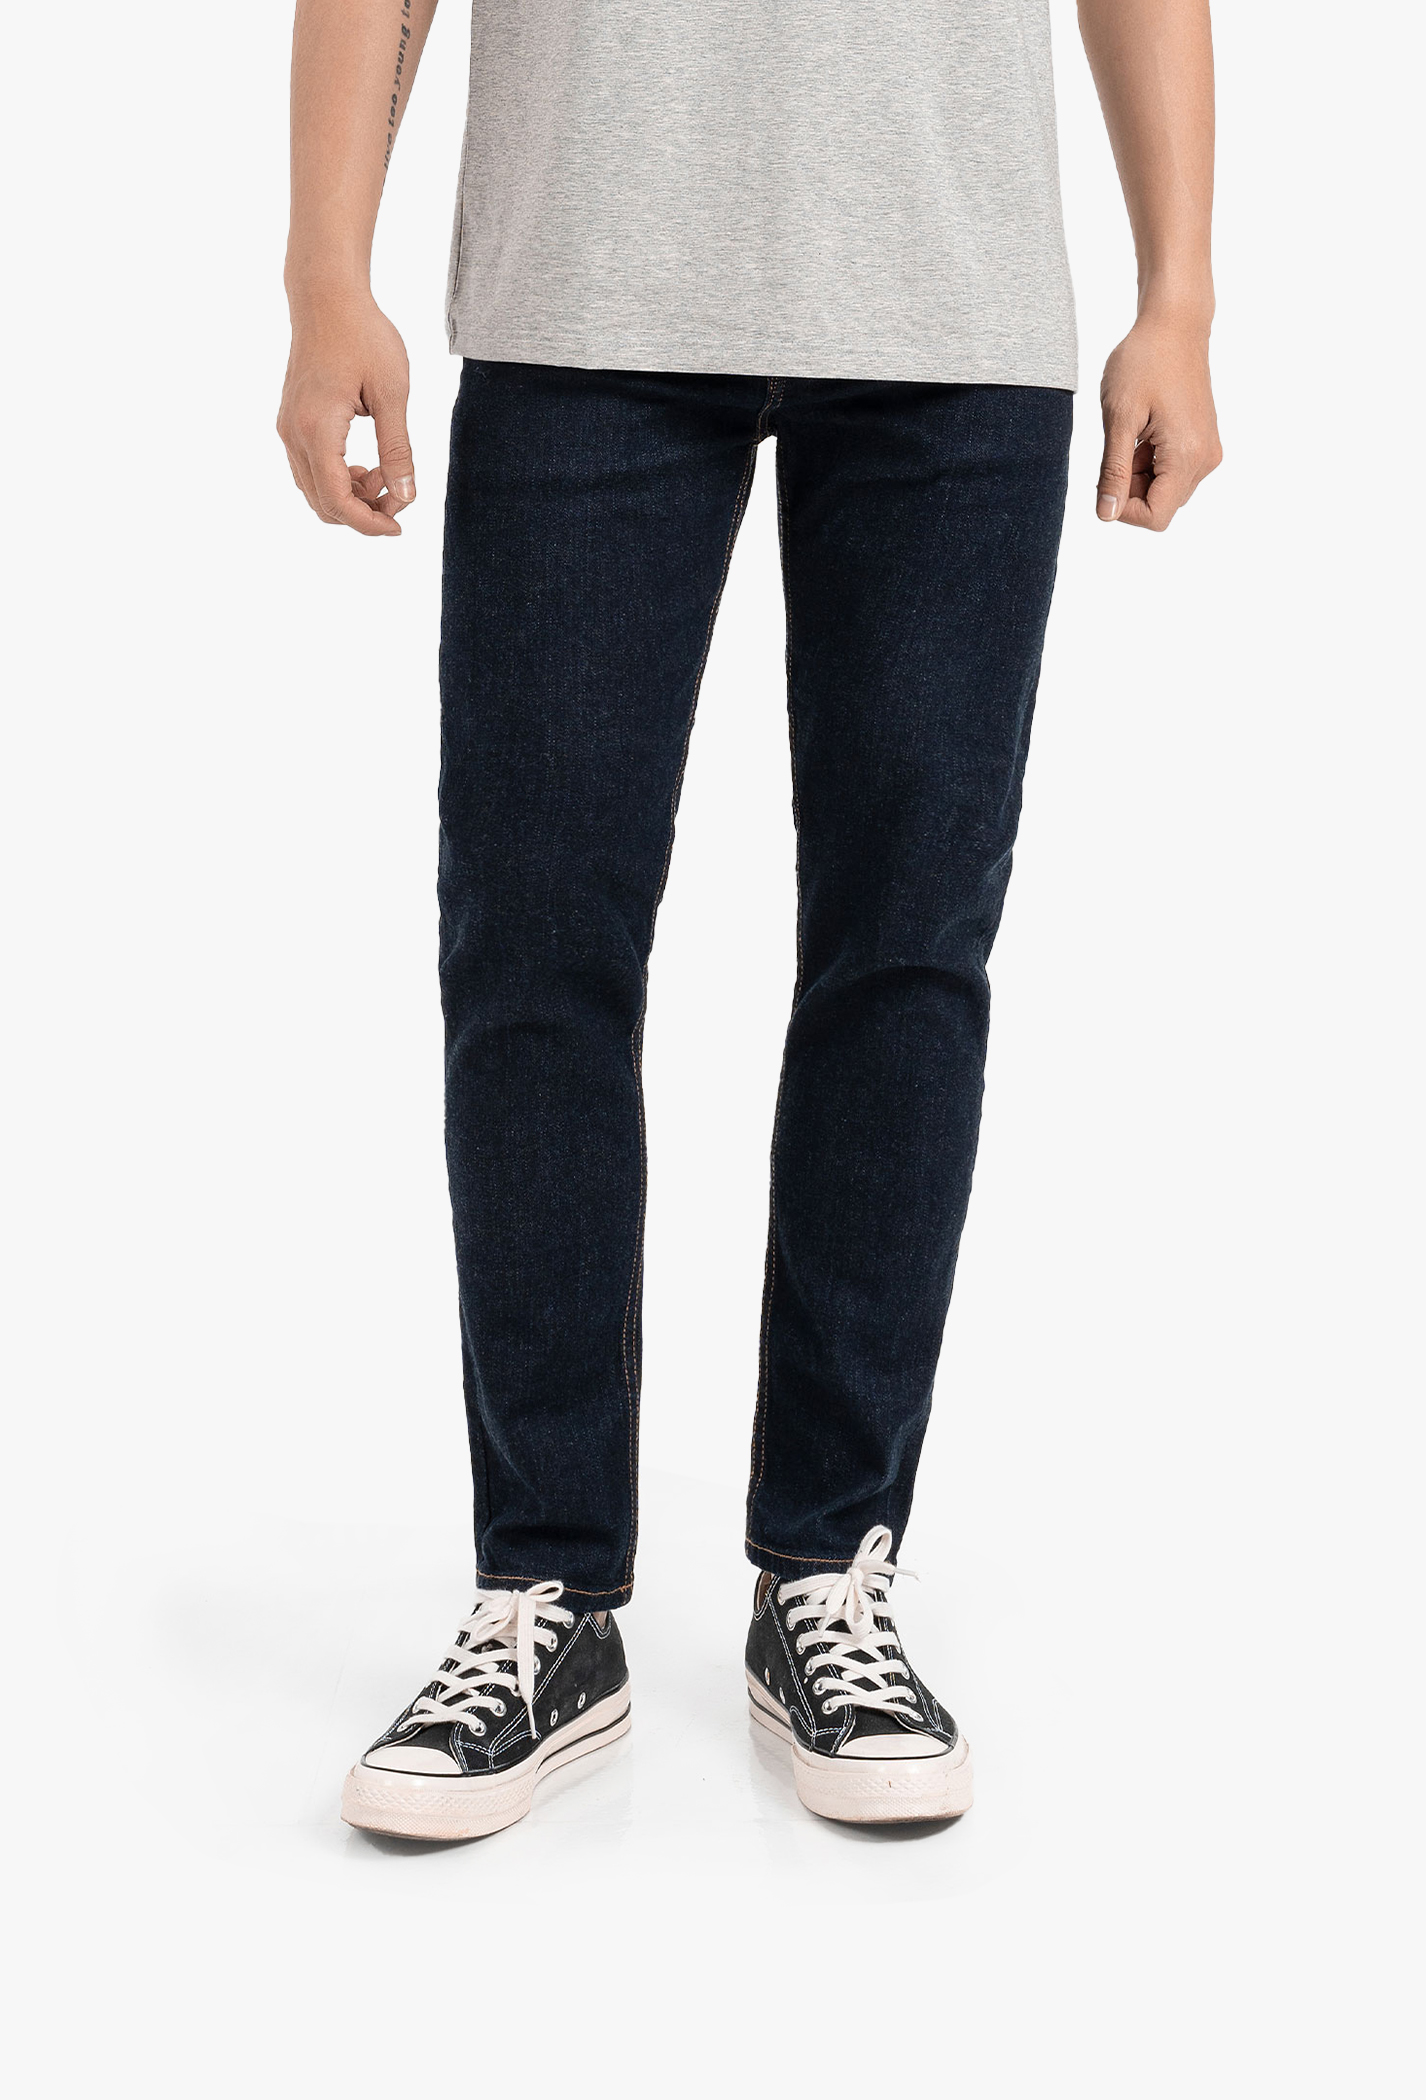 Quần Jeans Basic Slim V2 Xanh garment